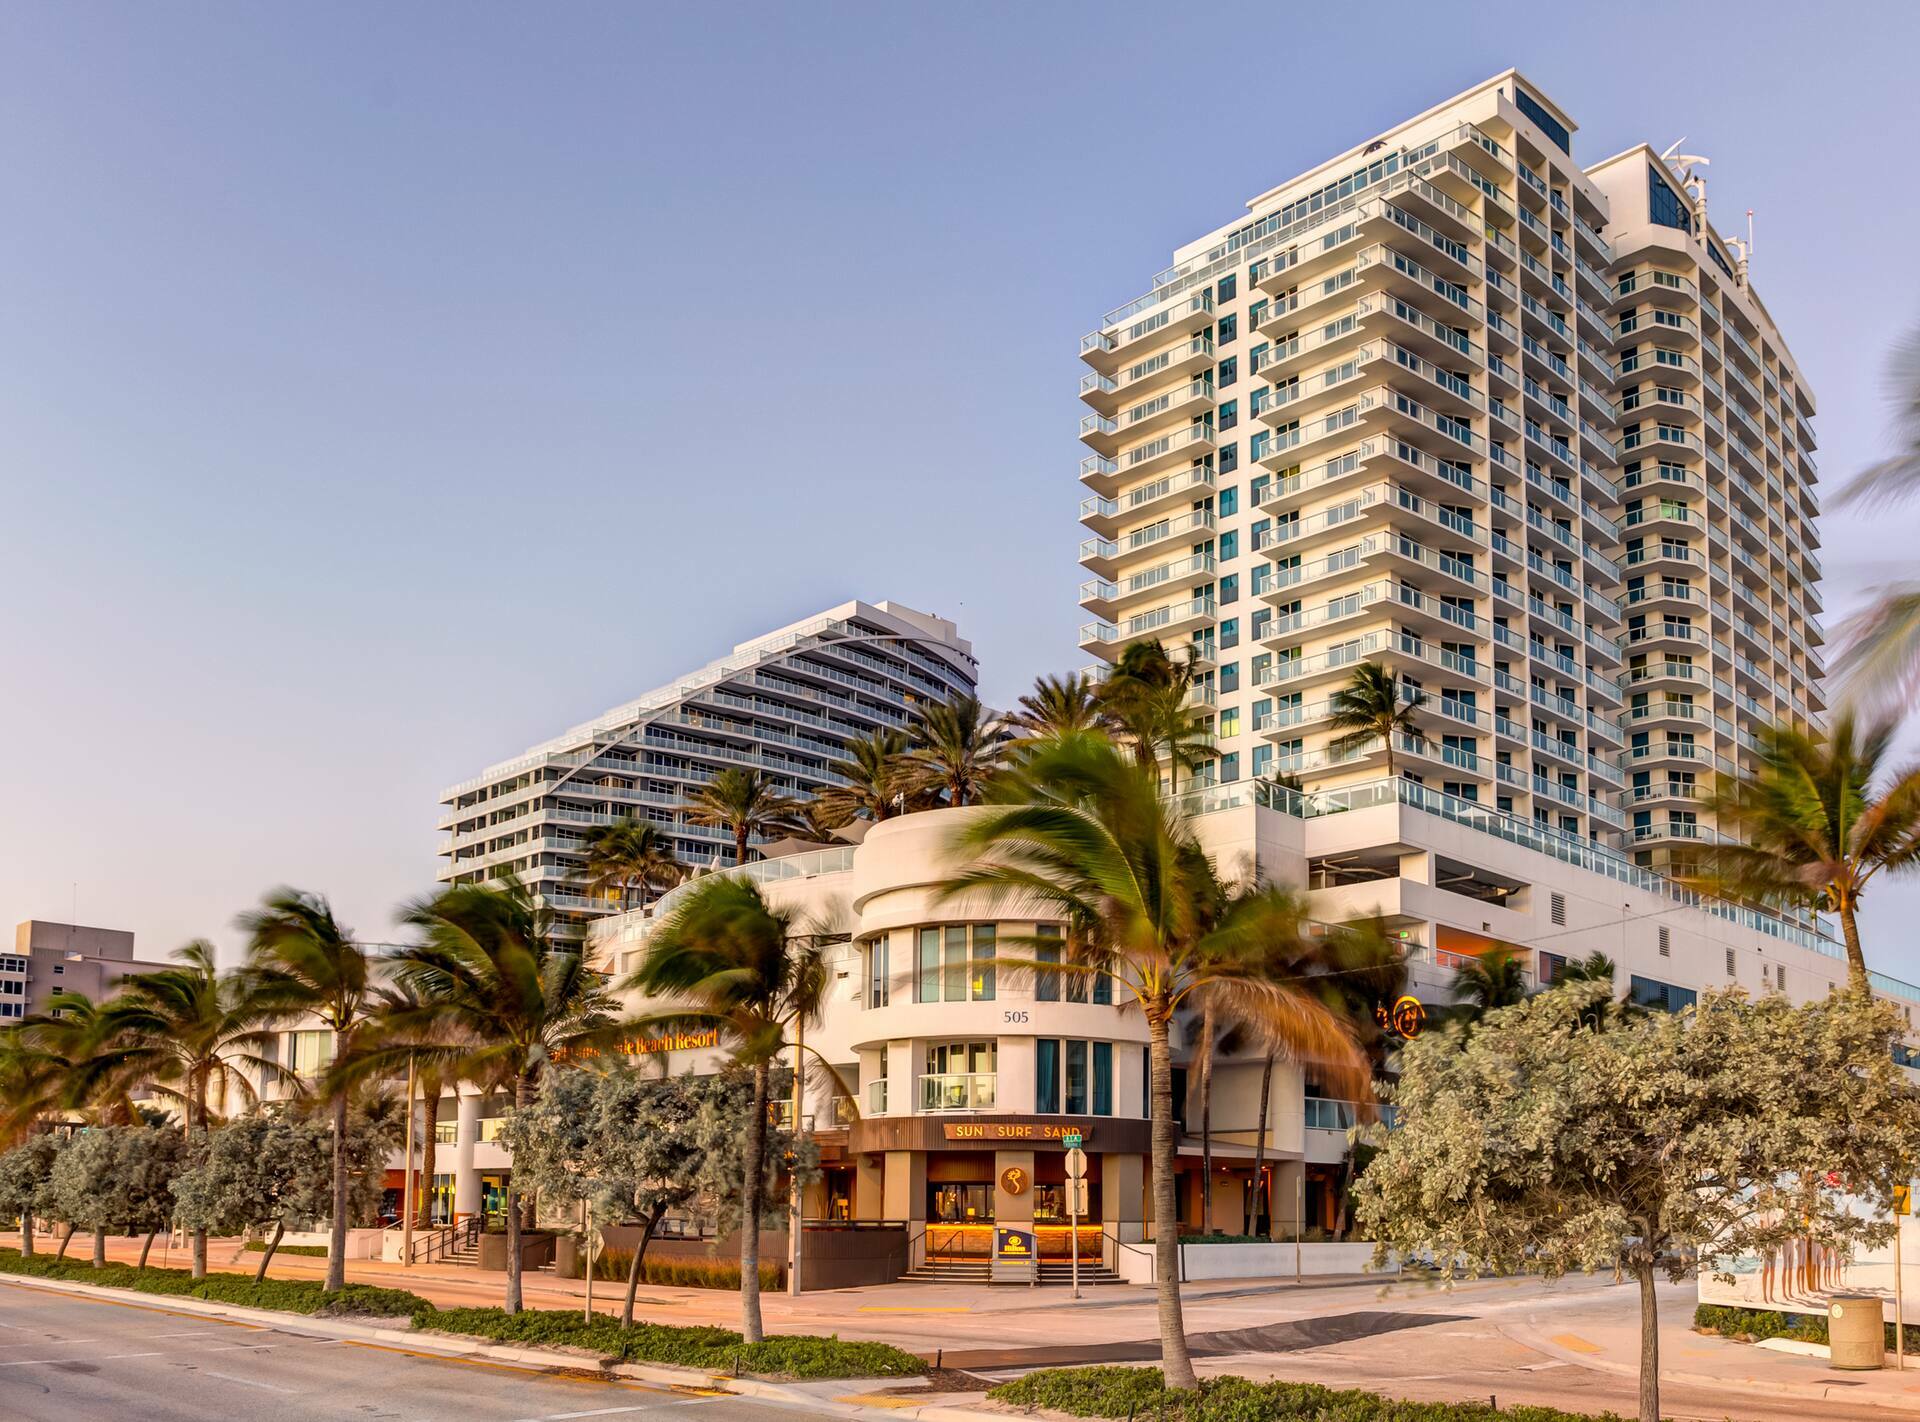 Photo of Hilton Fort Lauderdale Beach Resort, Fort Lauderdale, FL